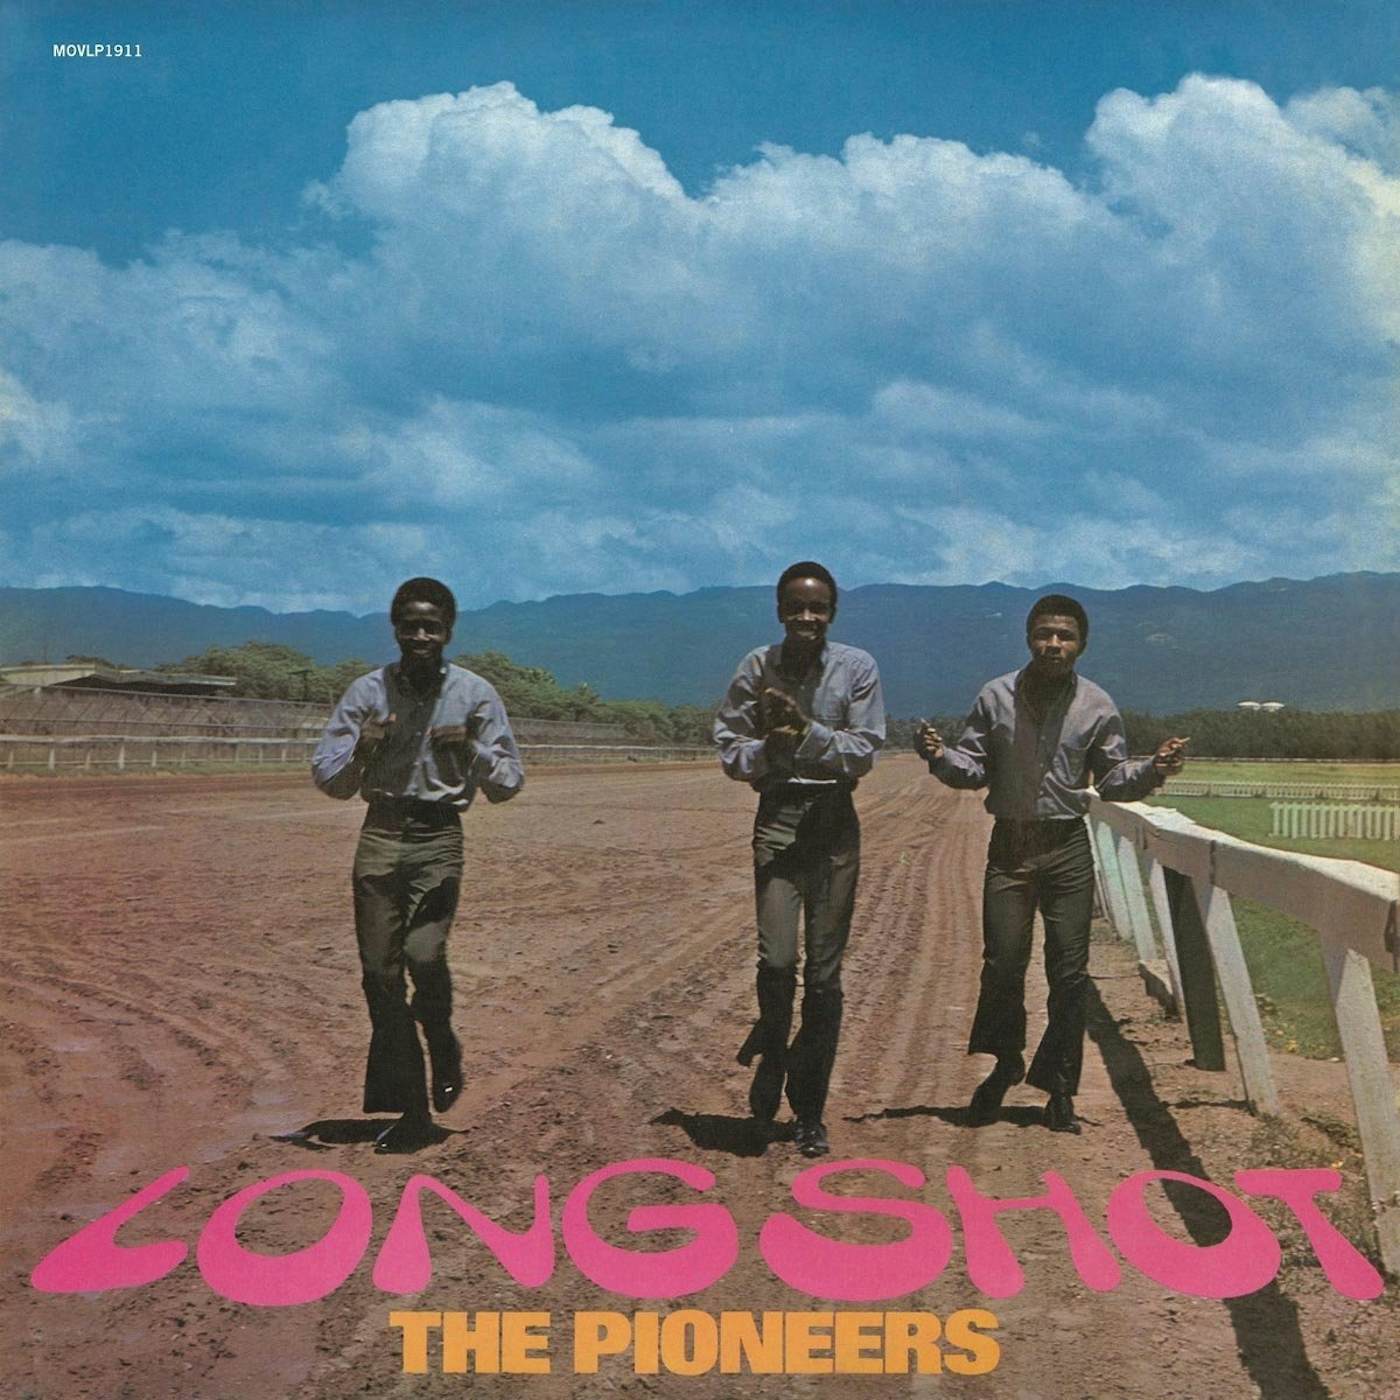 The Pioneers Long Shot Vinyl Record